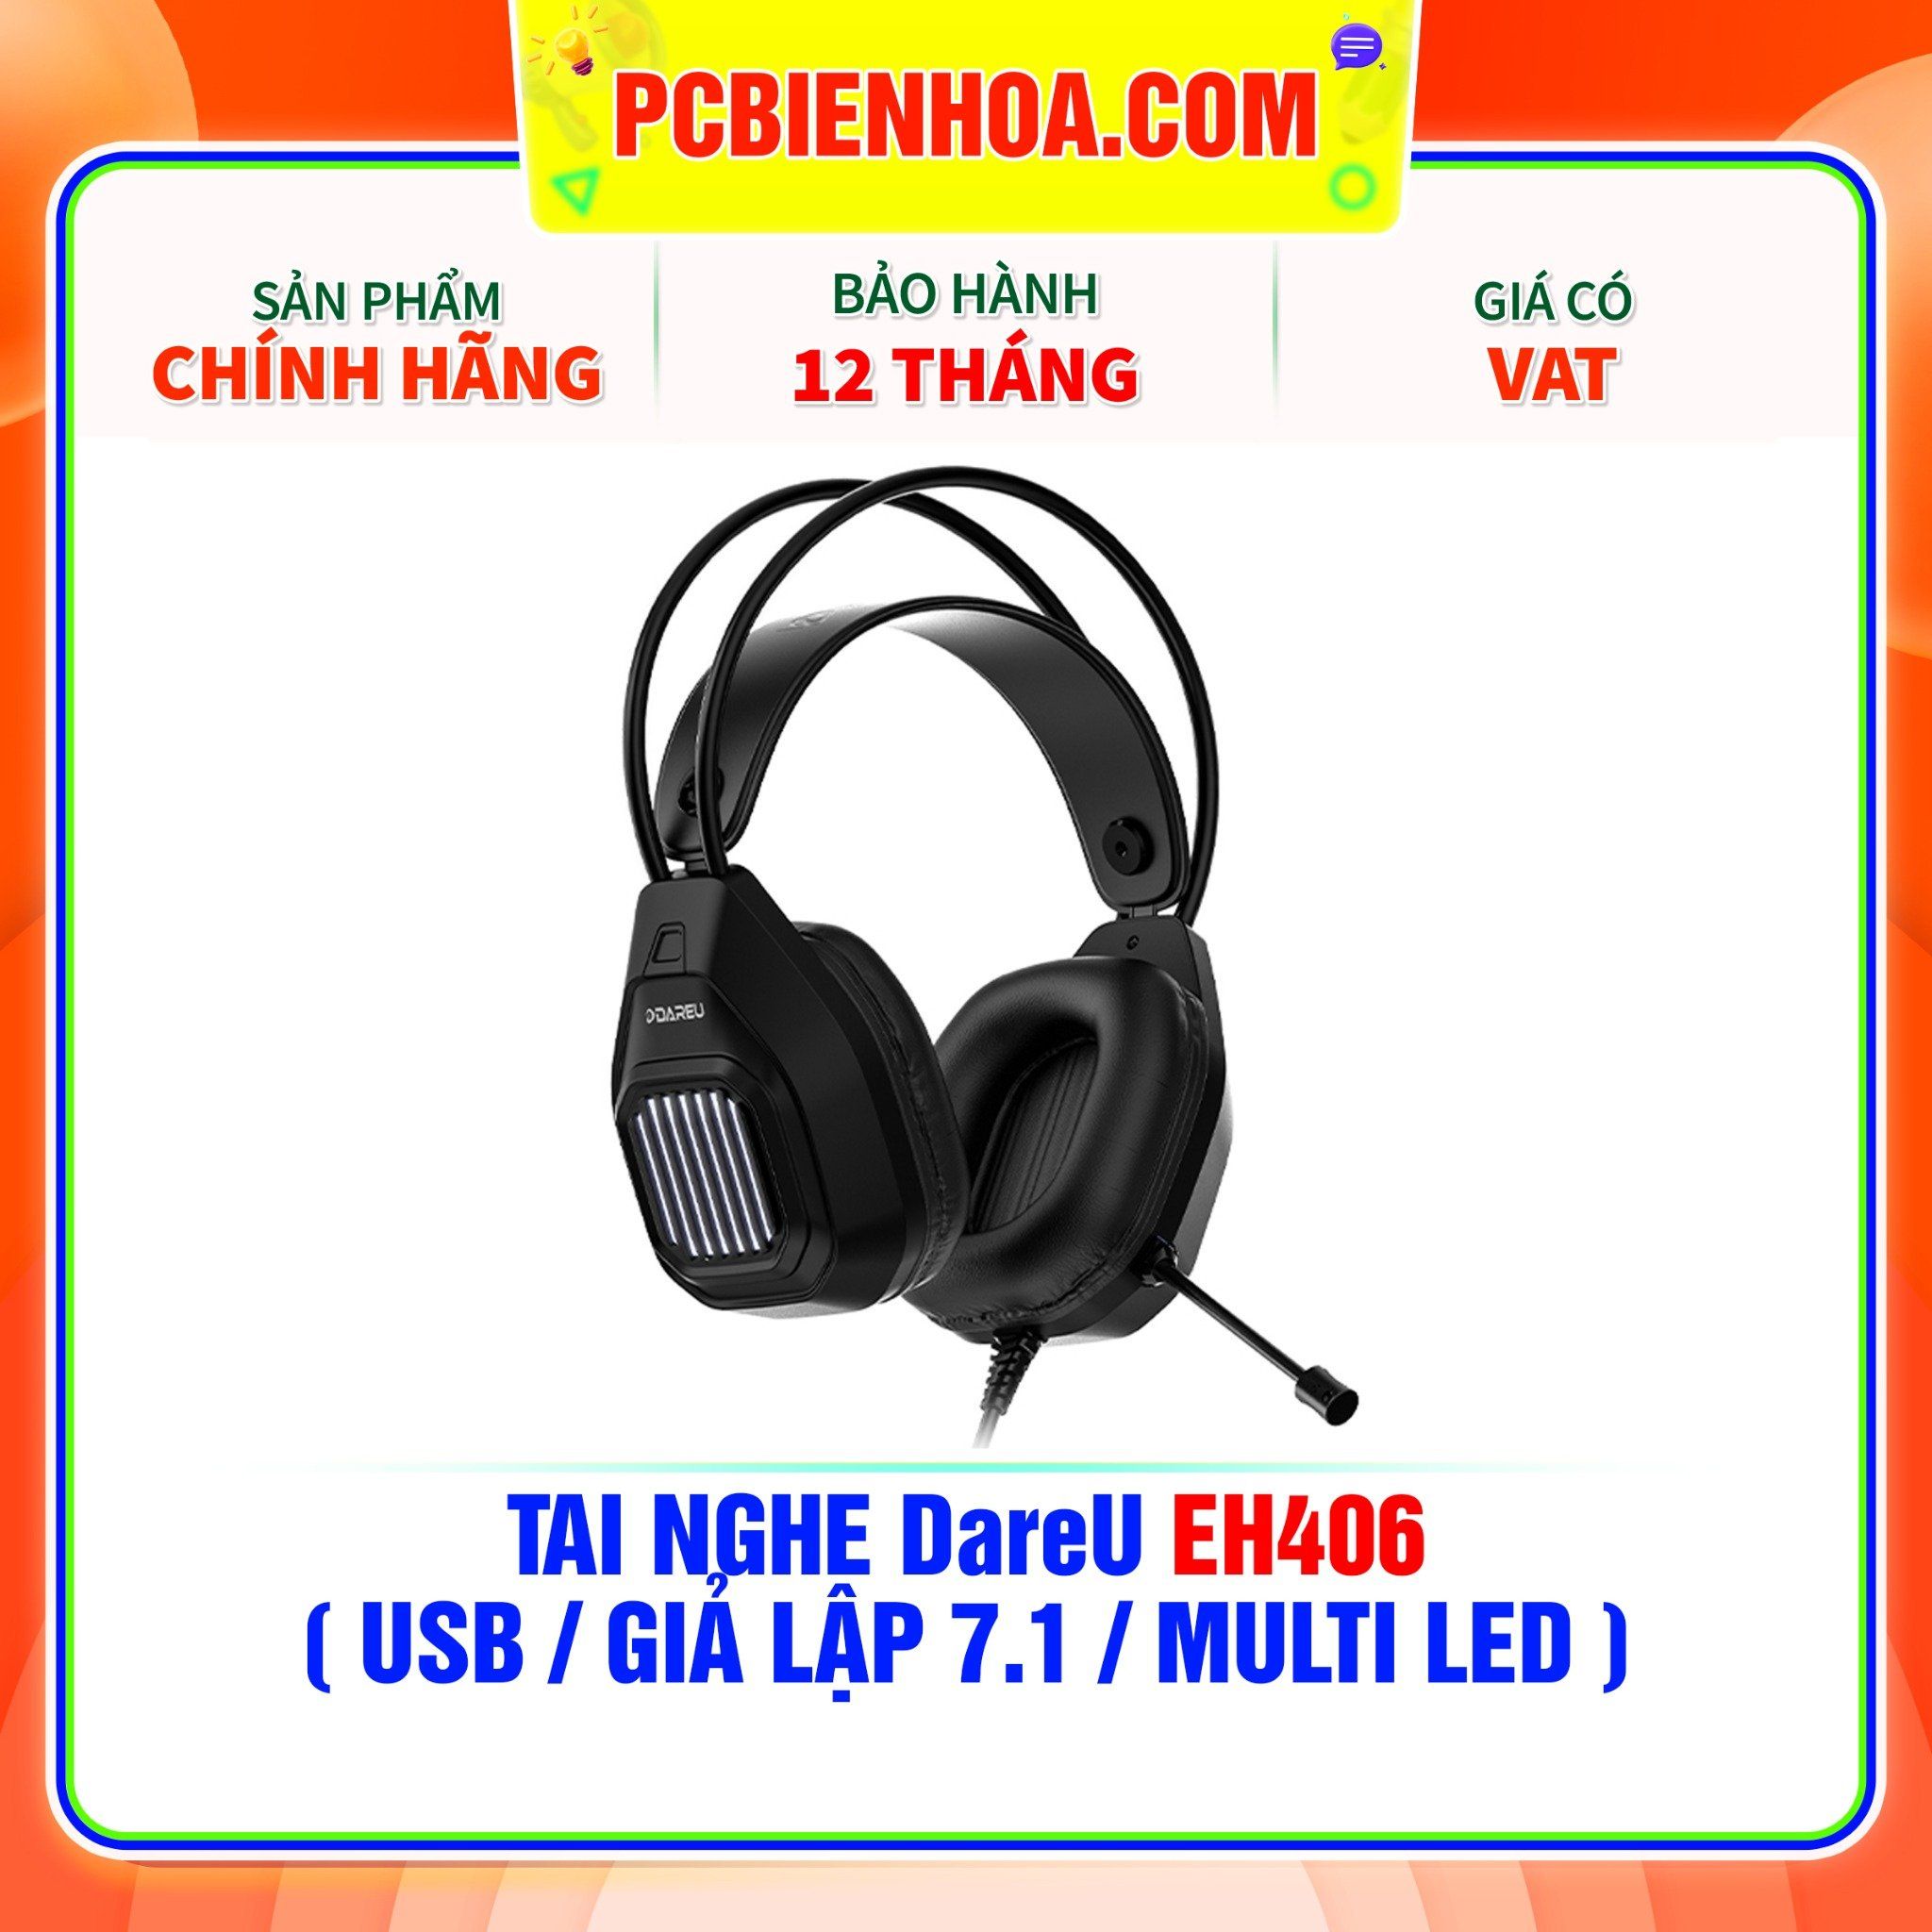  TAI NGHE DareU EH406 ( USB / GIẢ LẬP 7.1 / MULTI LED ) 